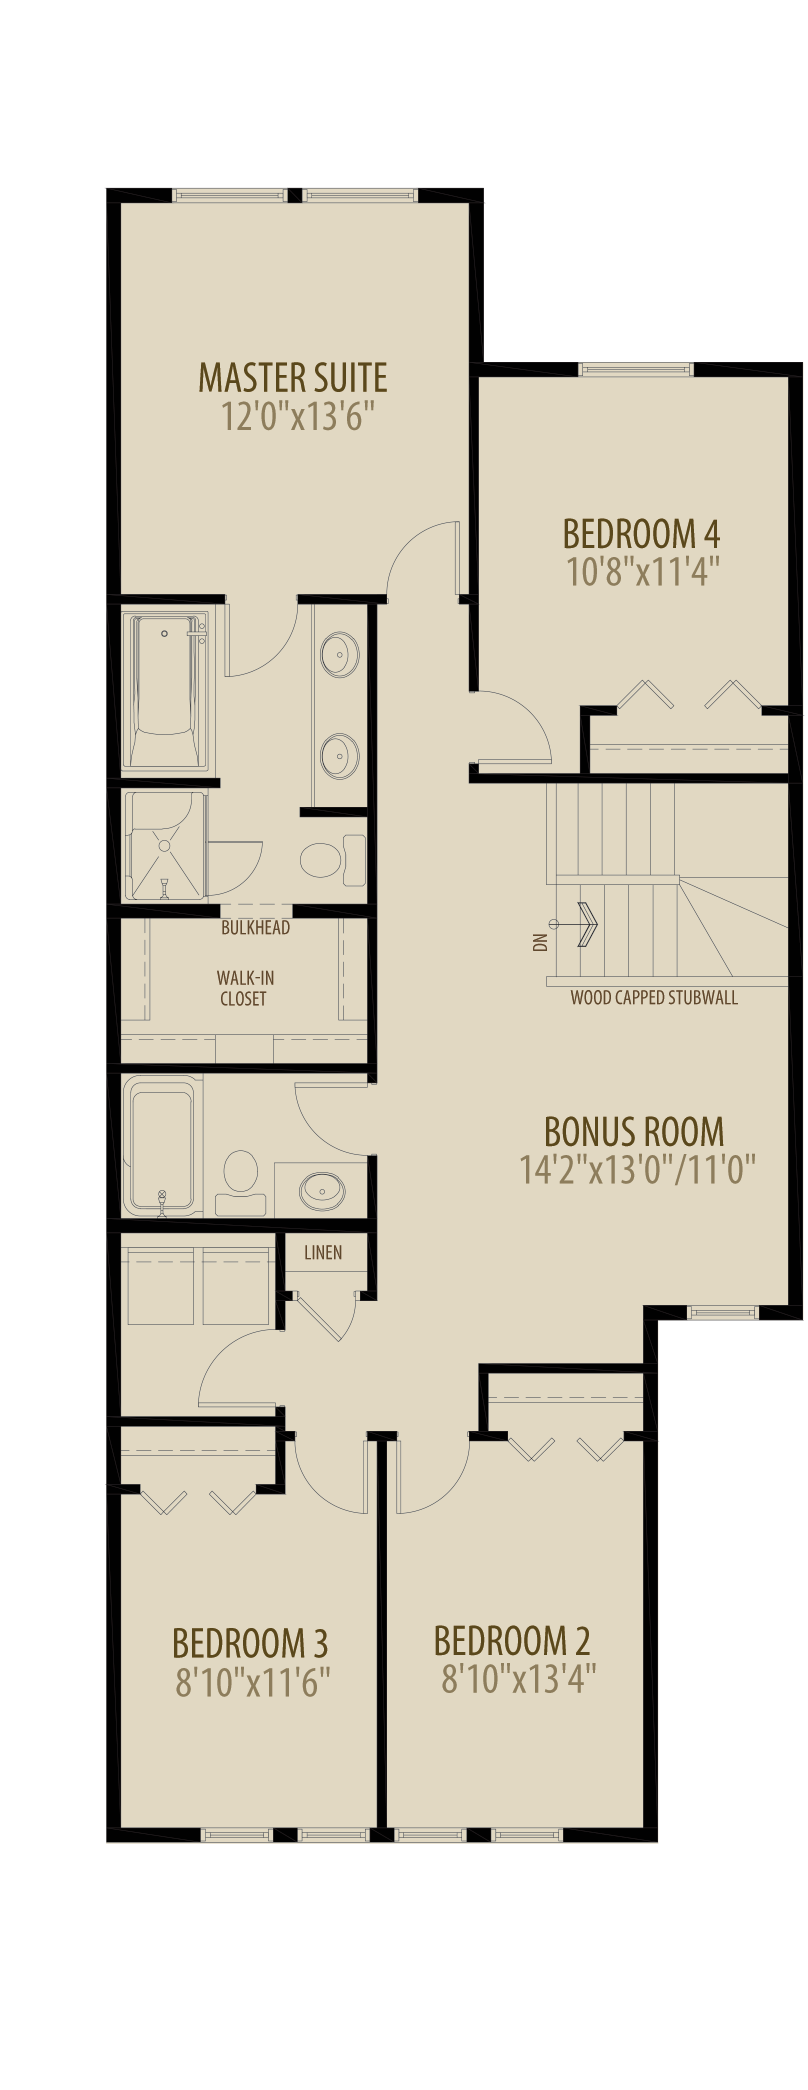 4th Bedroom Bonus Room Adds 105 sq ft